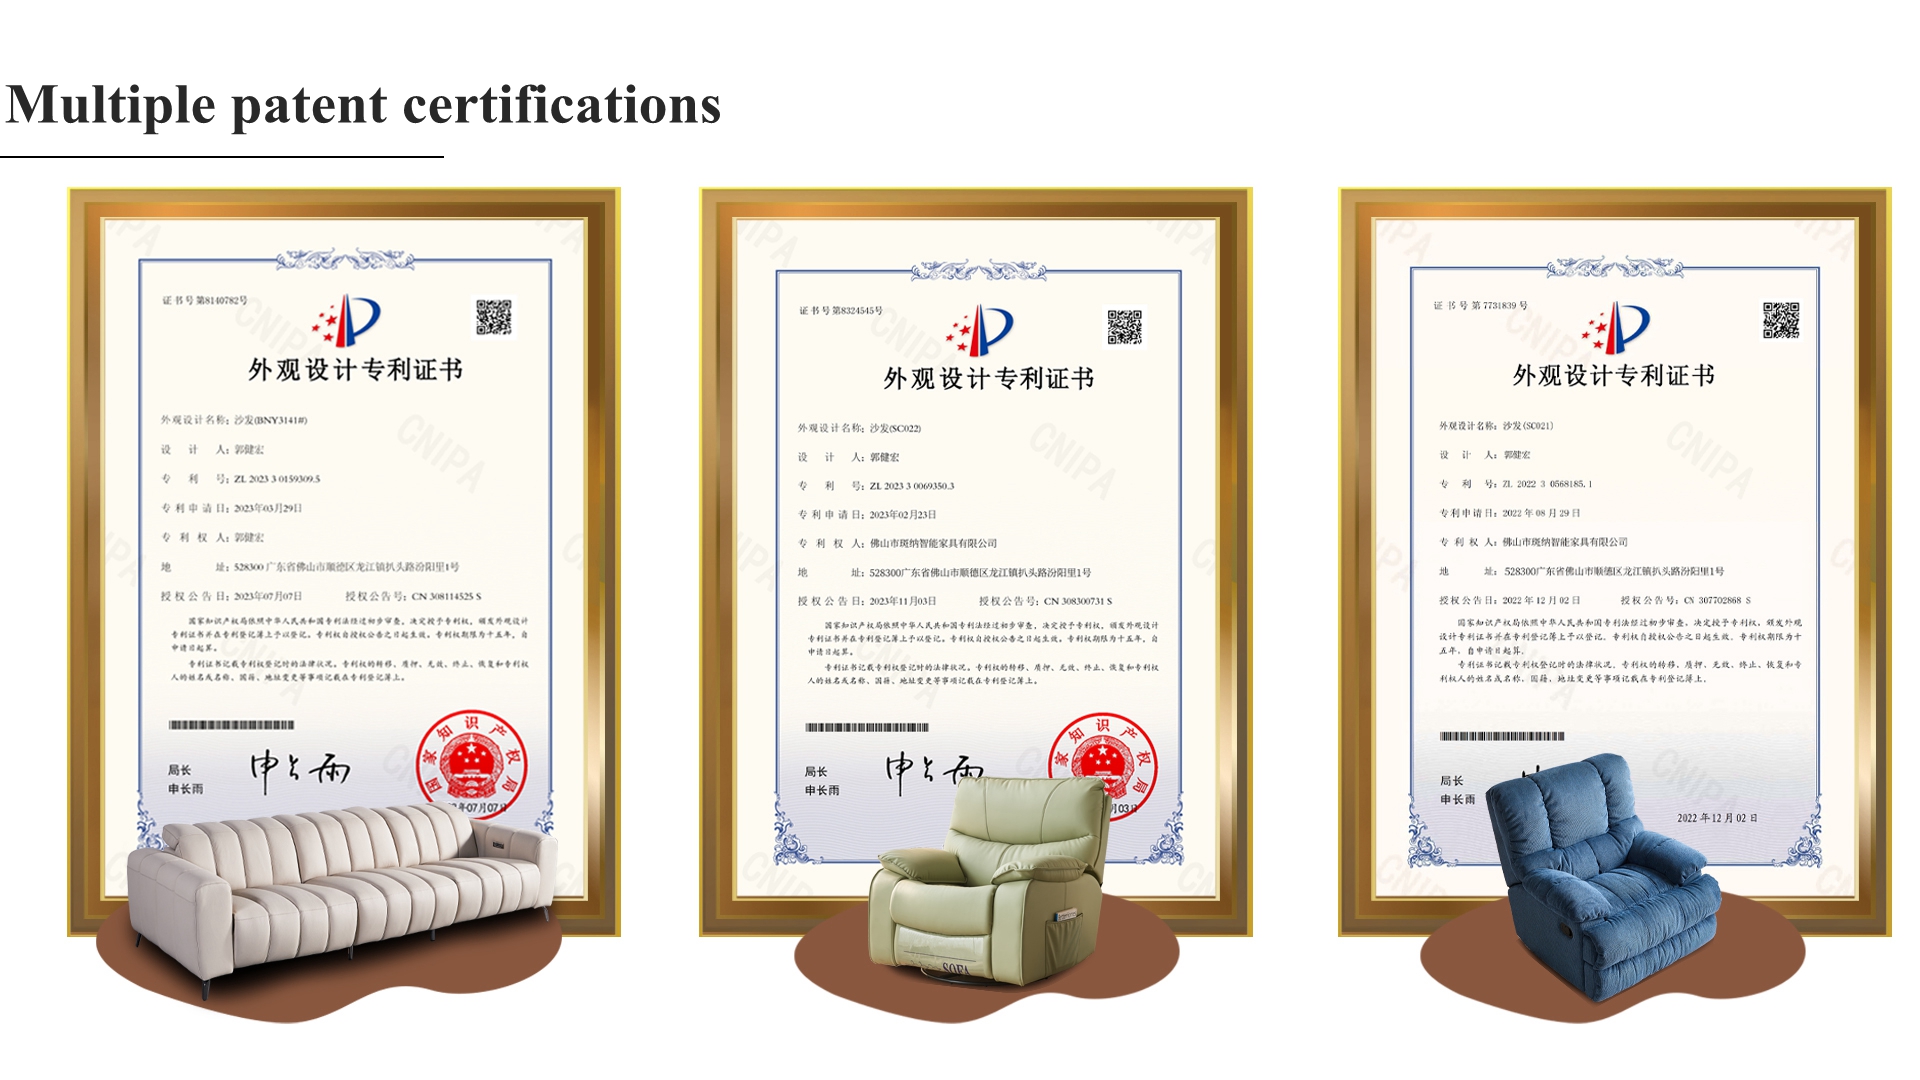 Foshan Banner Intelligent Furniture Co., Ltd